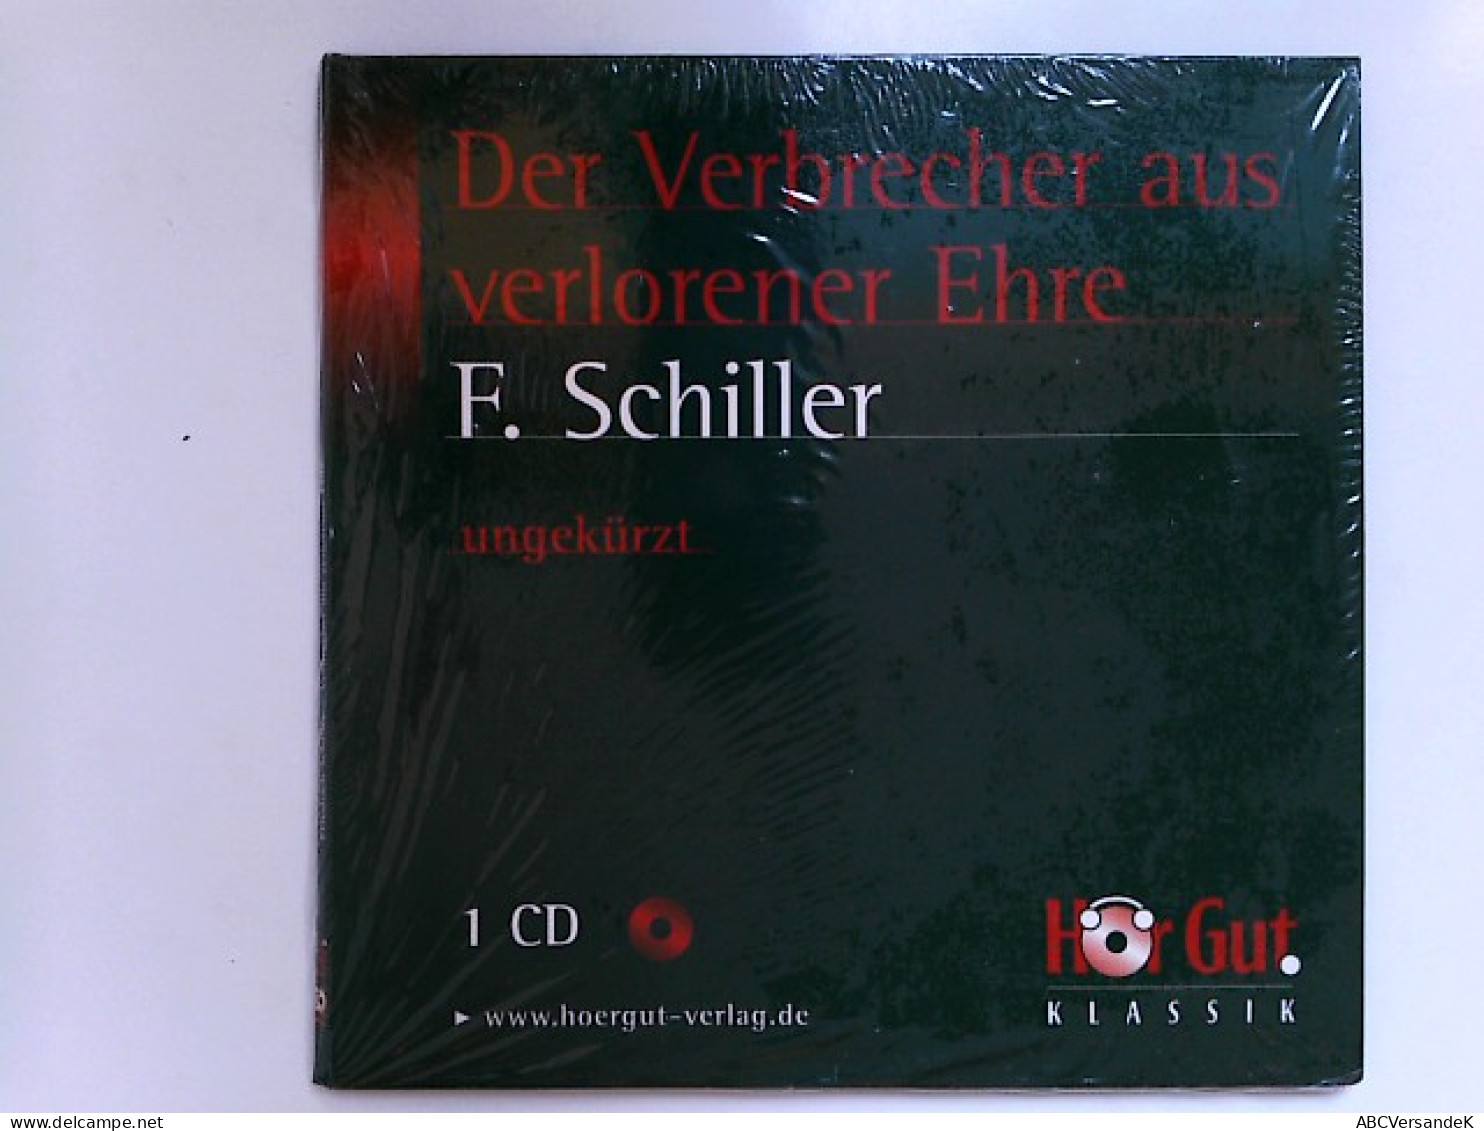 Verbrecher Aus Verlorener Ehre. CD - CD